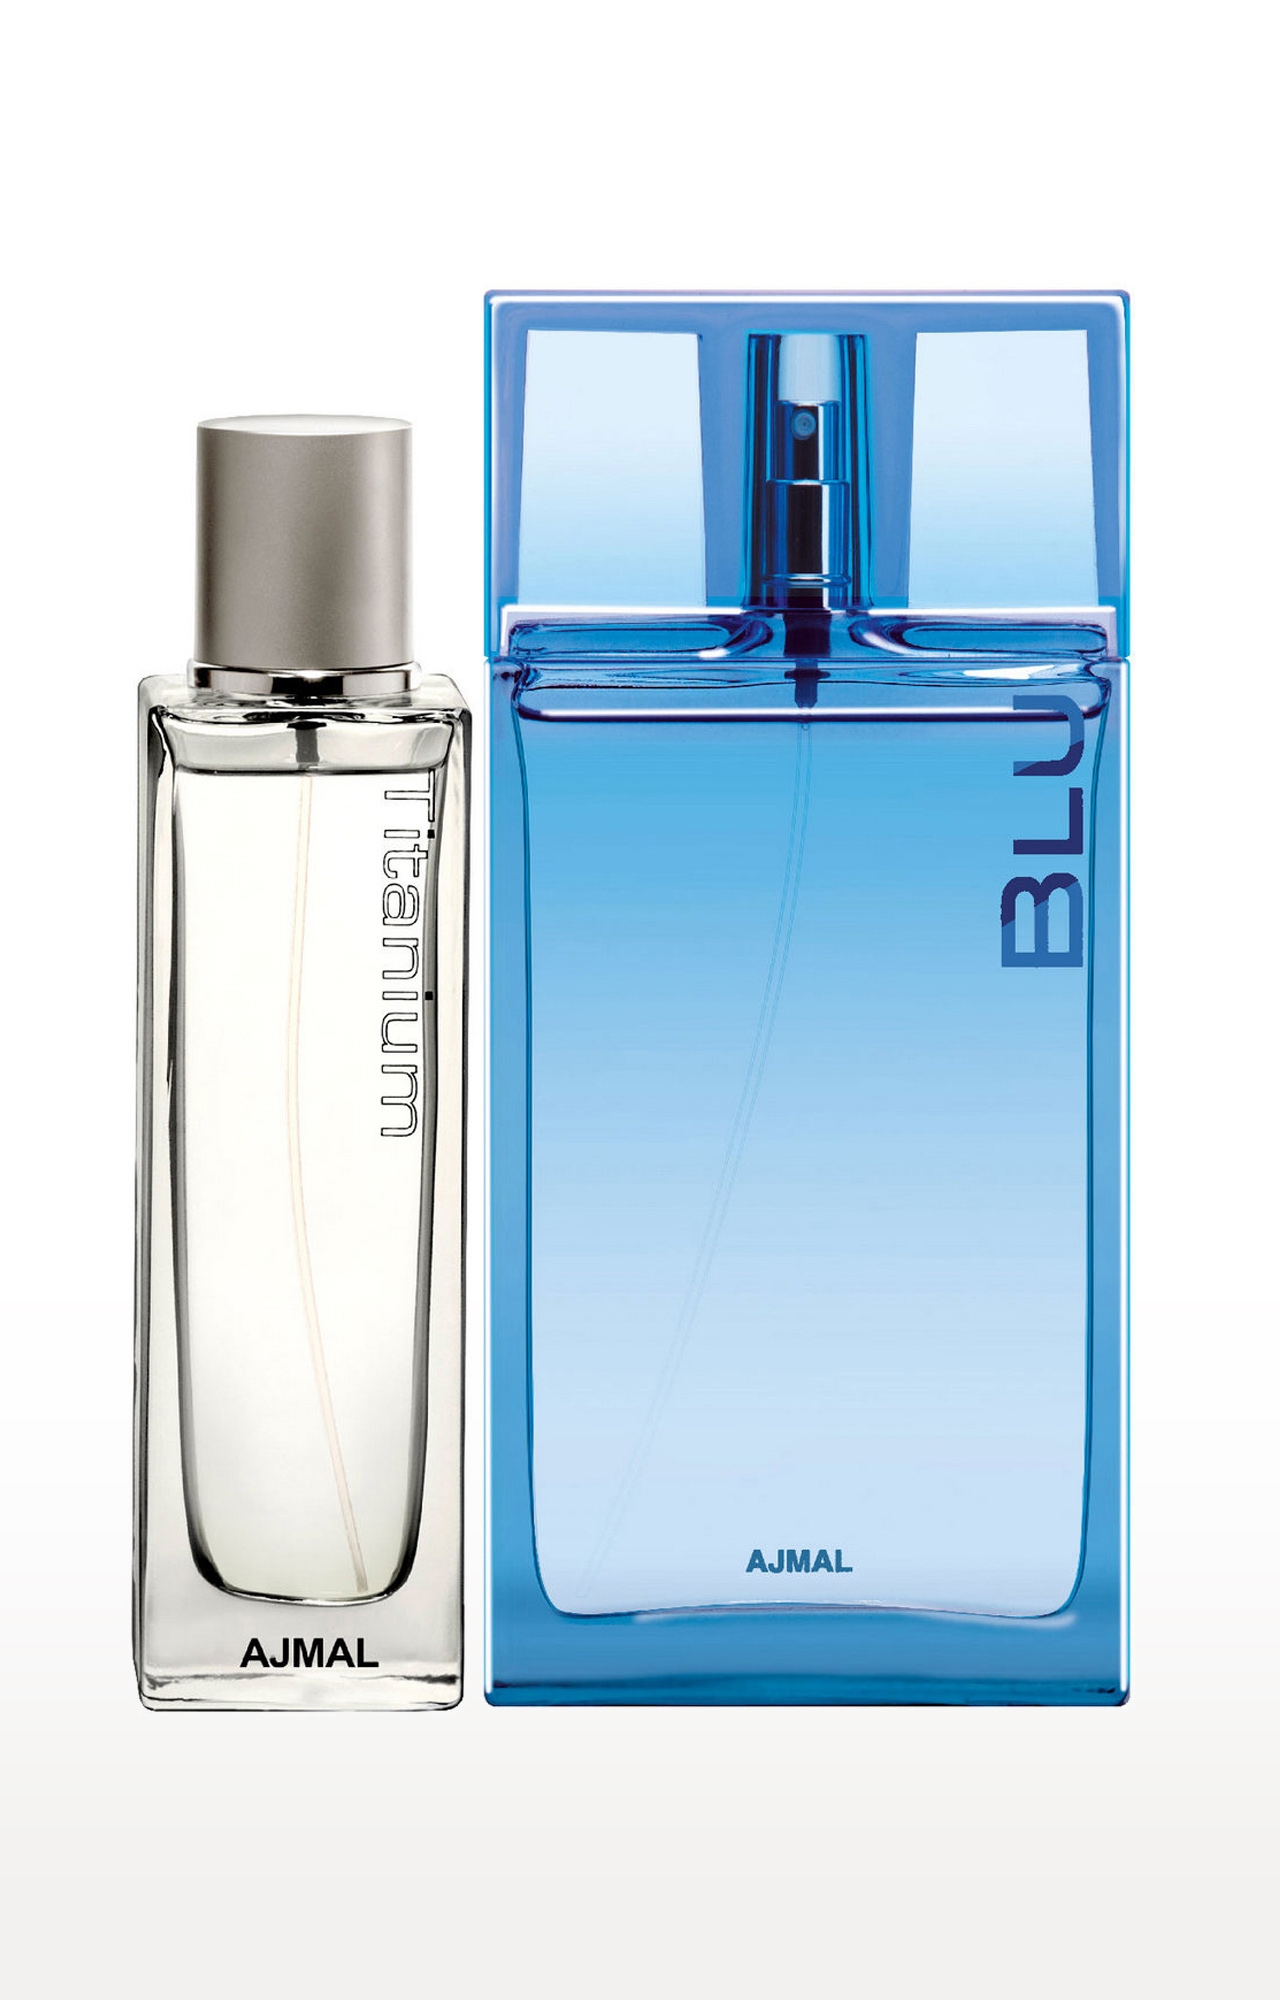 Ajmal | Ajmal Titanium EDP Citrus Spicy Perfume 100ml for Men and Blu EDP Aquatic Woody Perfume 90ml for Men + 2 Parfum Testers FREE